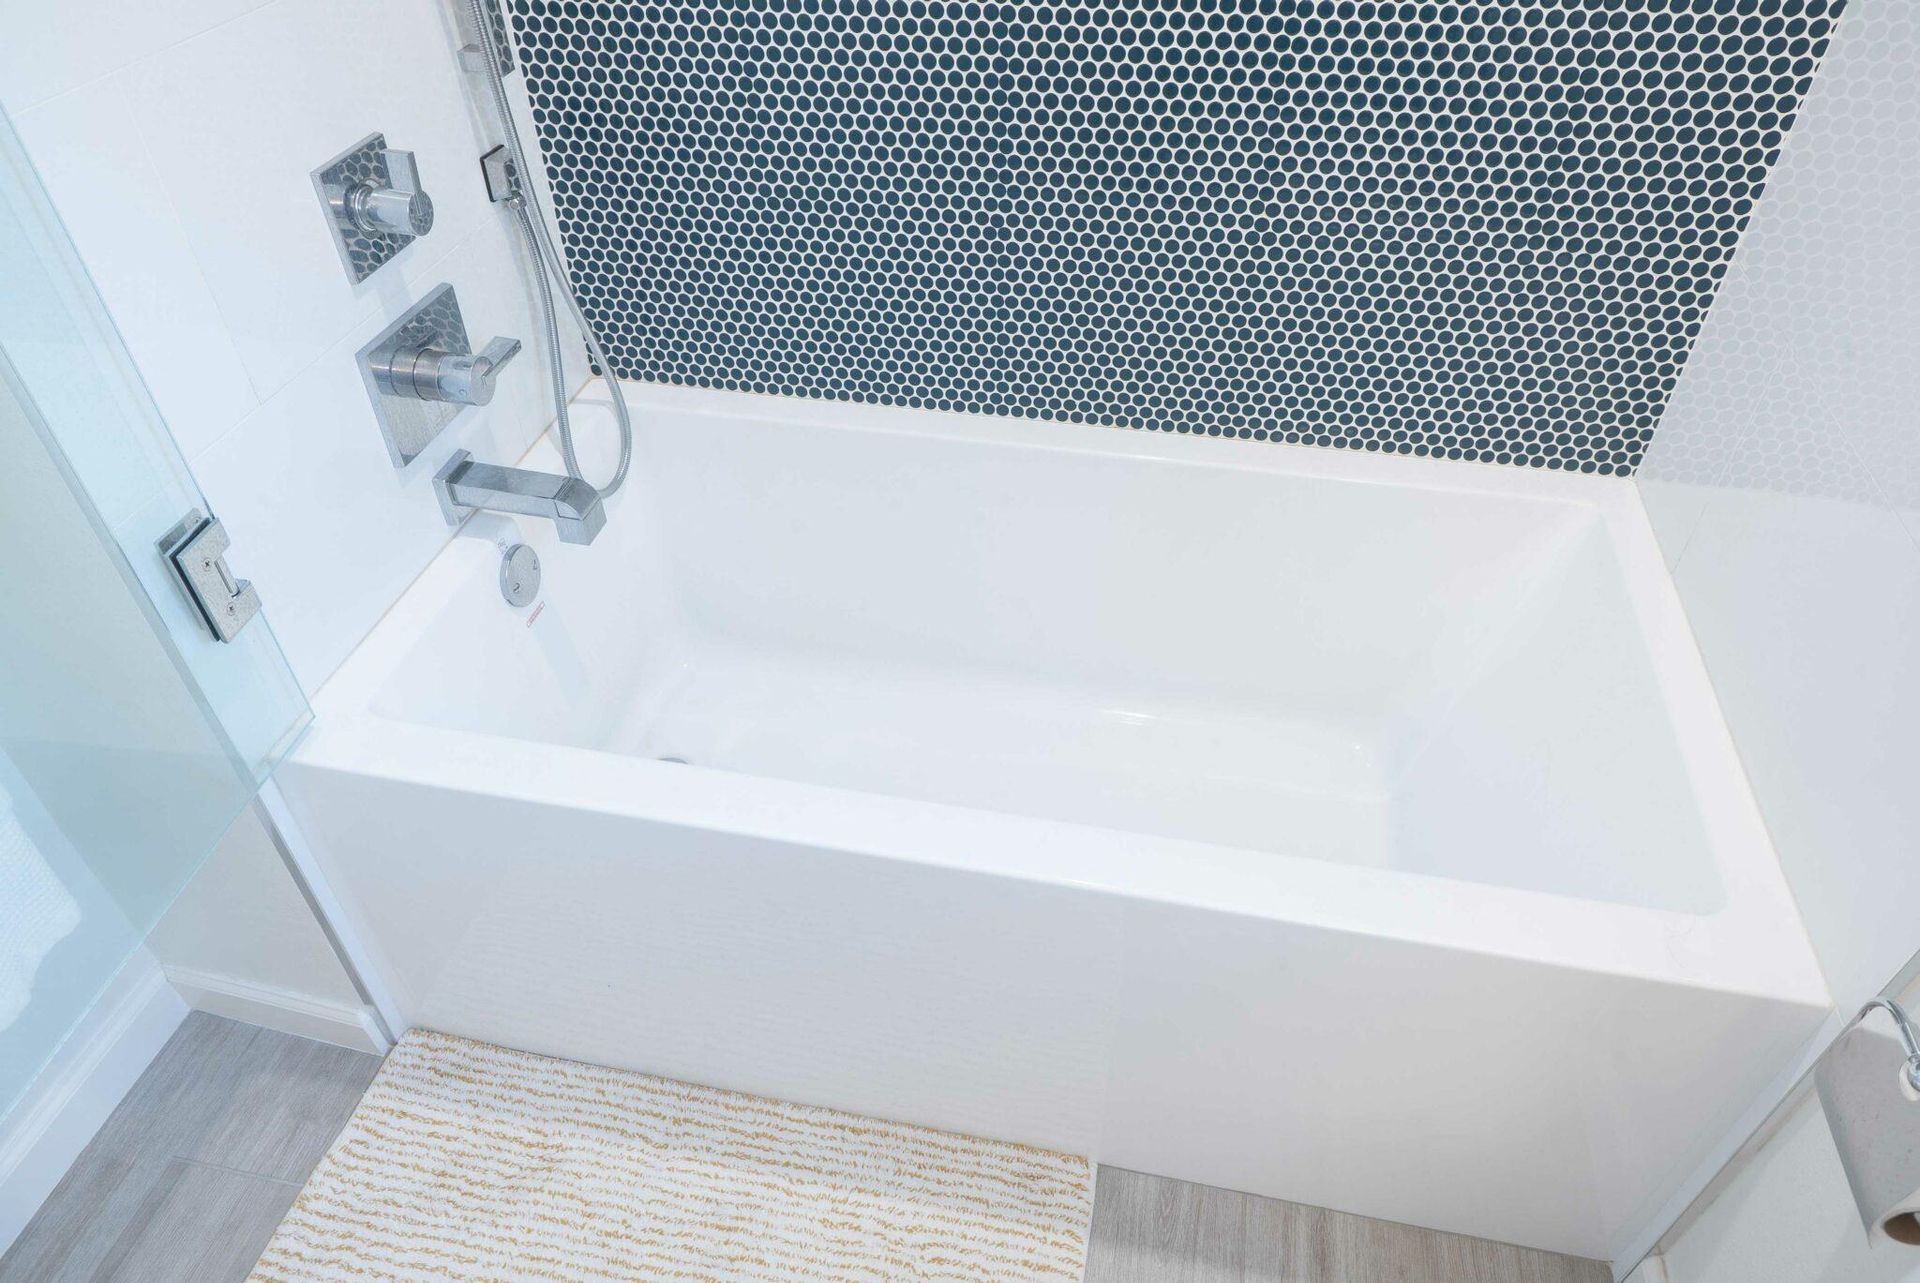 a white bathtub in a bathroom with a shower head .